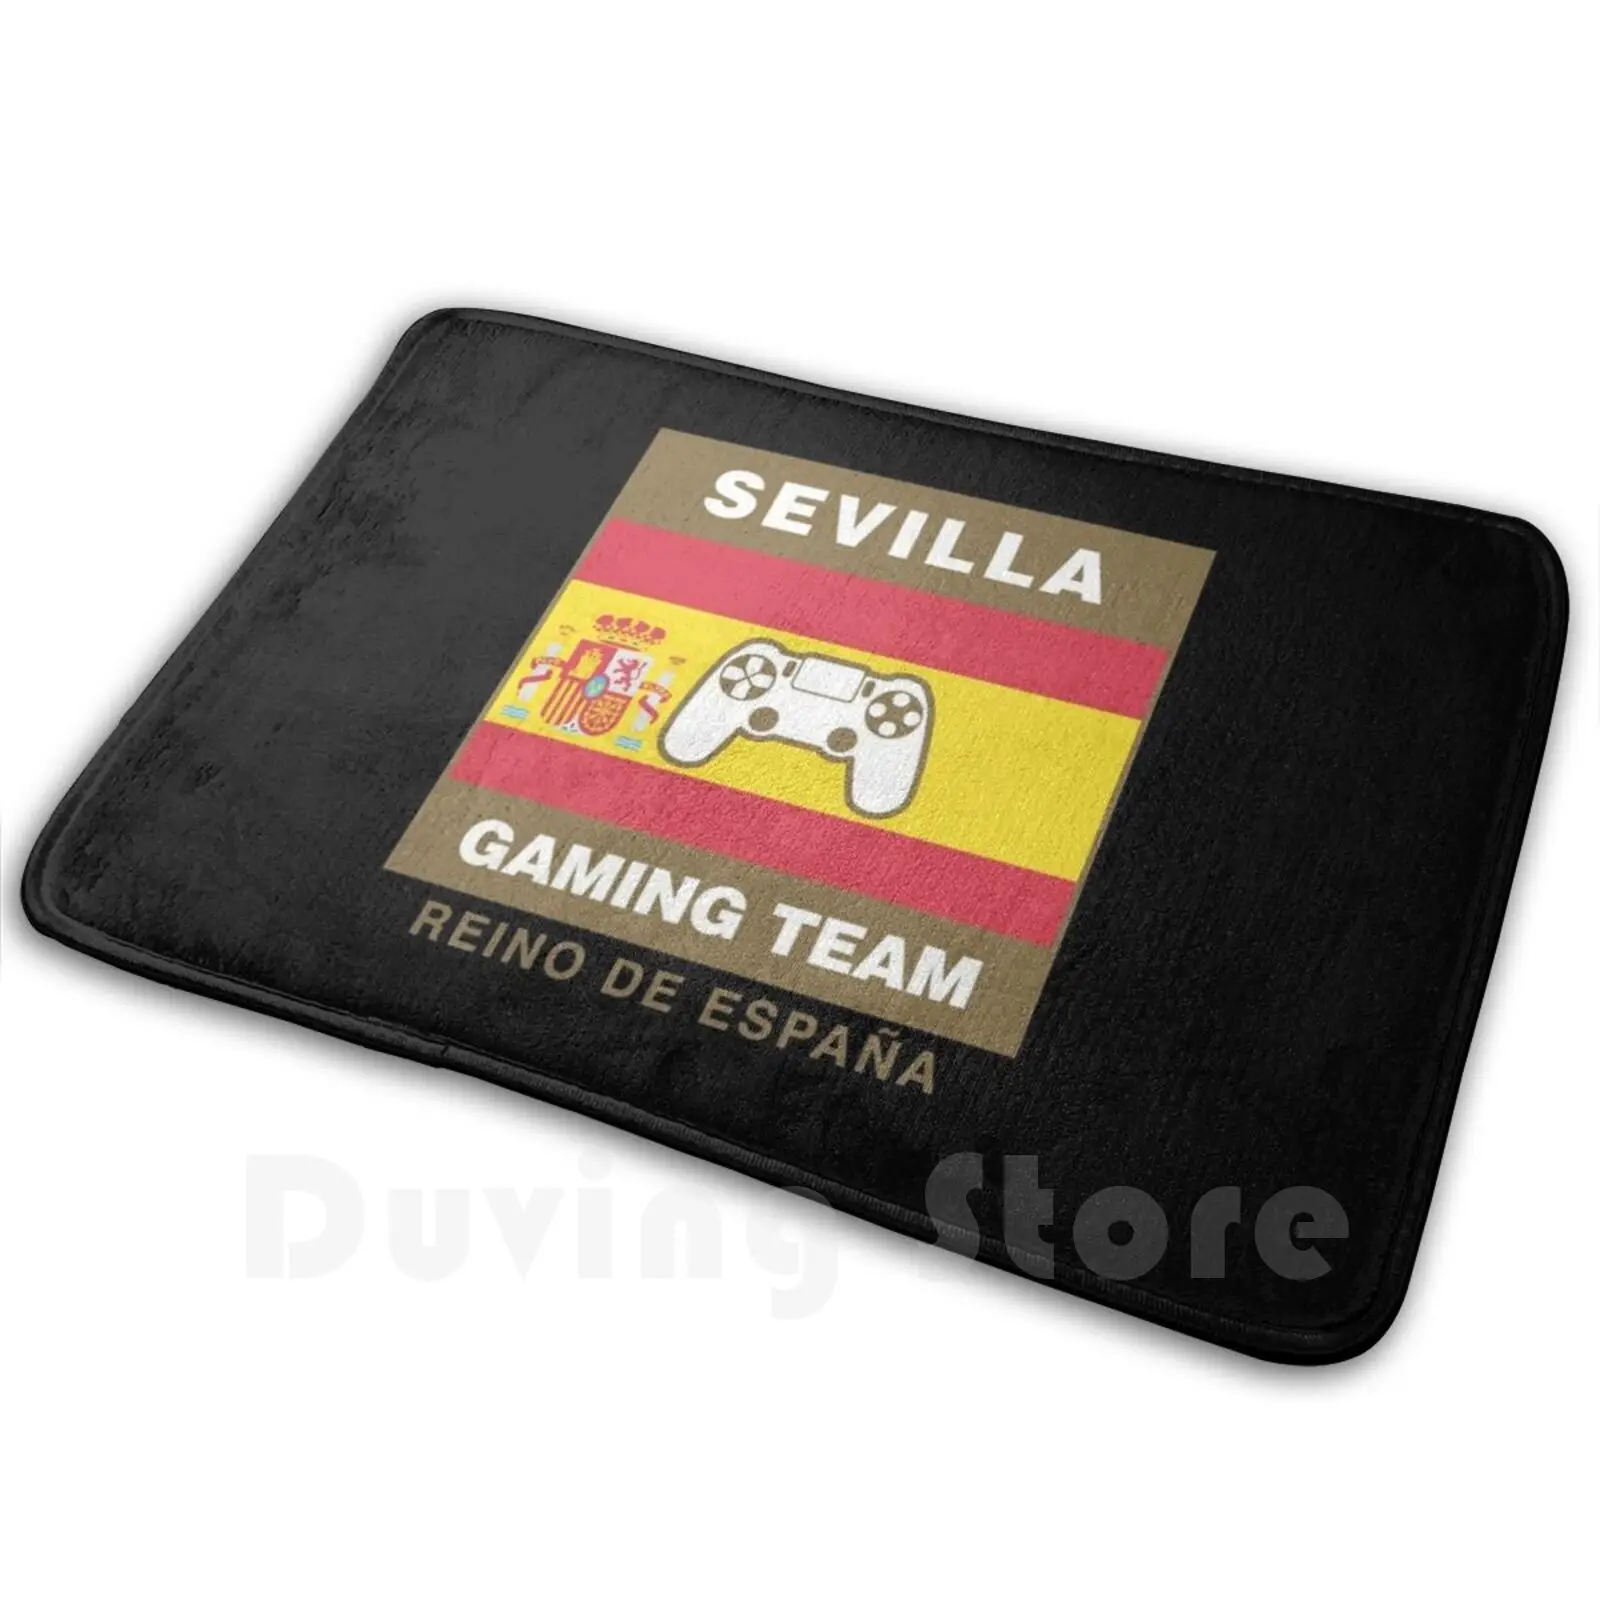 Sevilla Pro Gaming Team Испания Килим Мат Мат Възглавница Е Мека Нескользящая Sevilla Pro Gaming Team Киберспортивная Екип Киберспортивная Екип